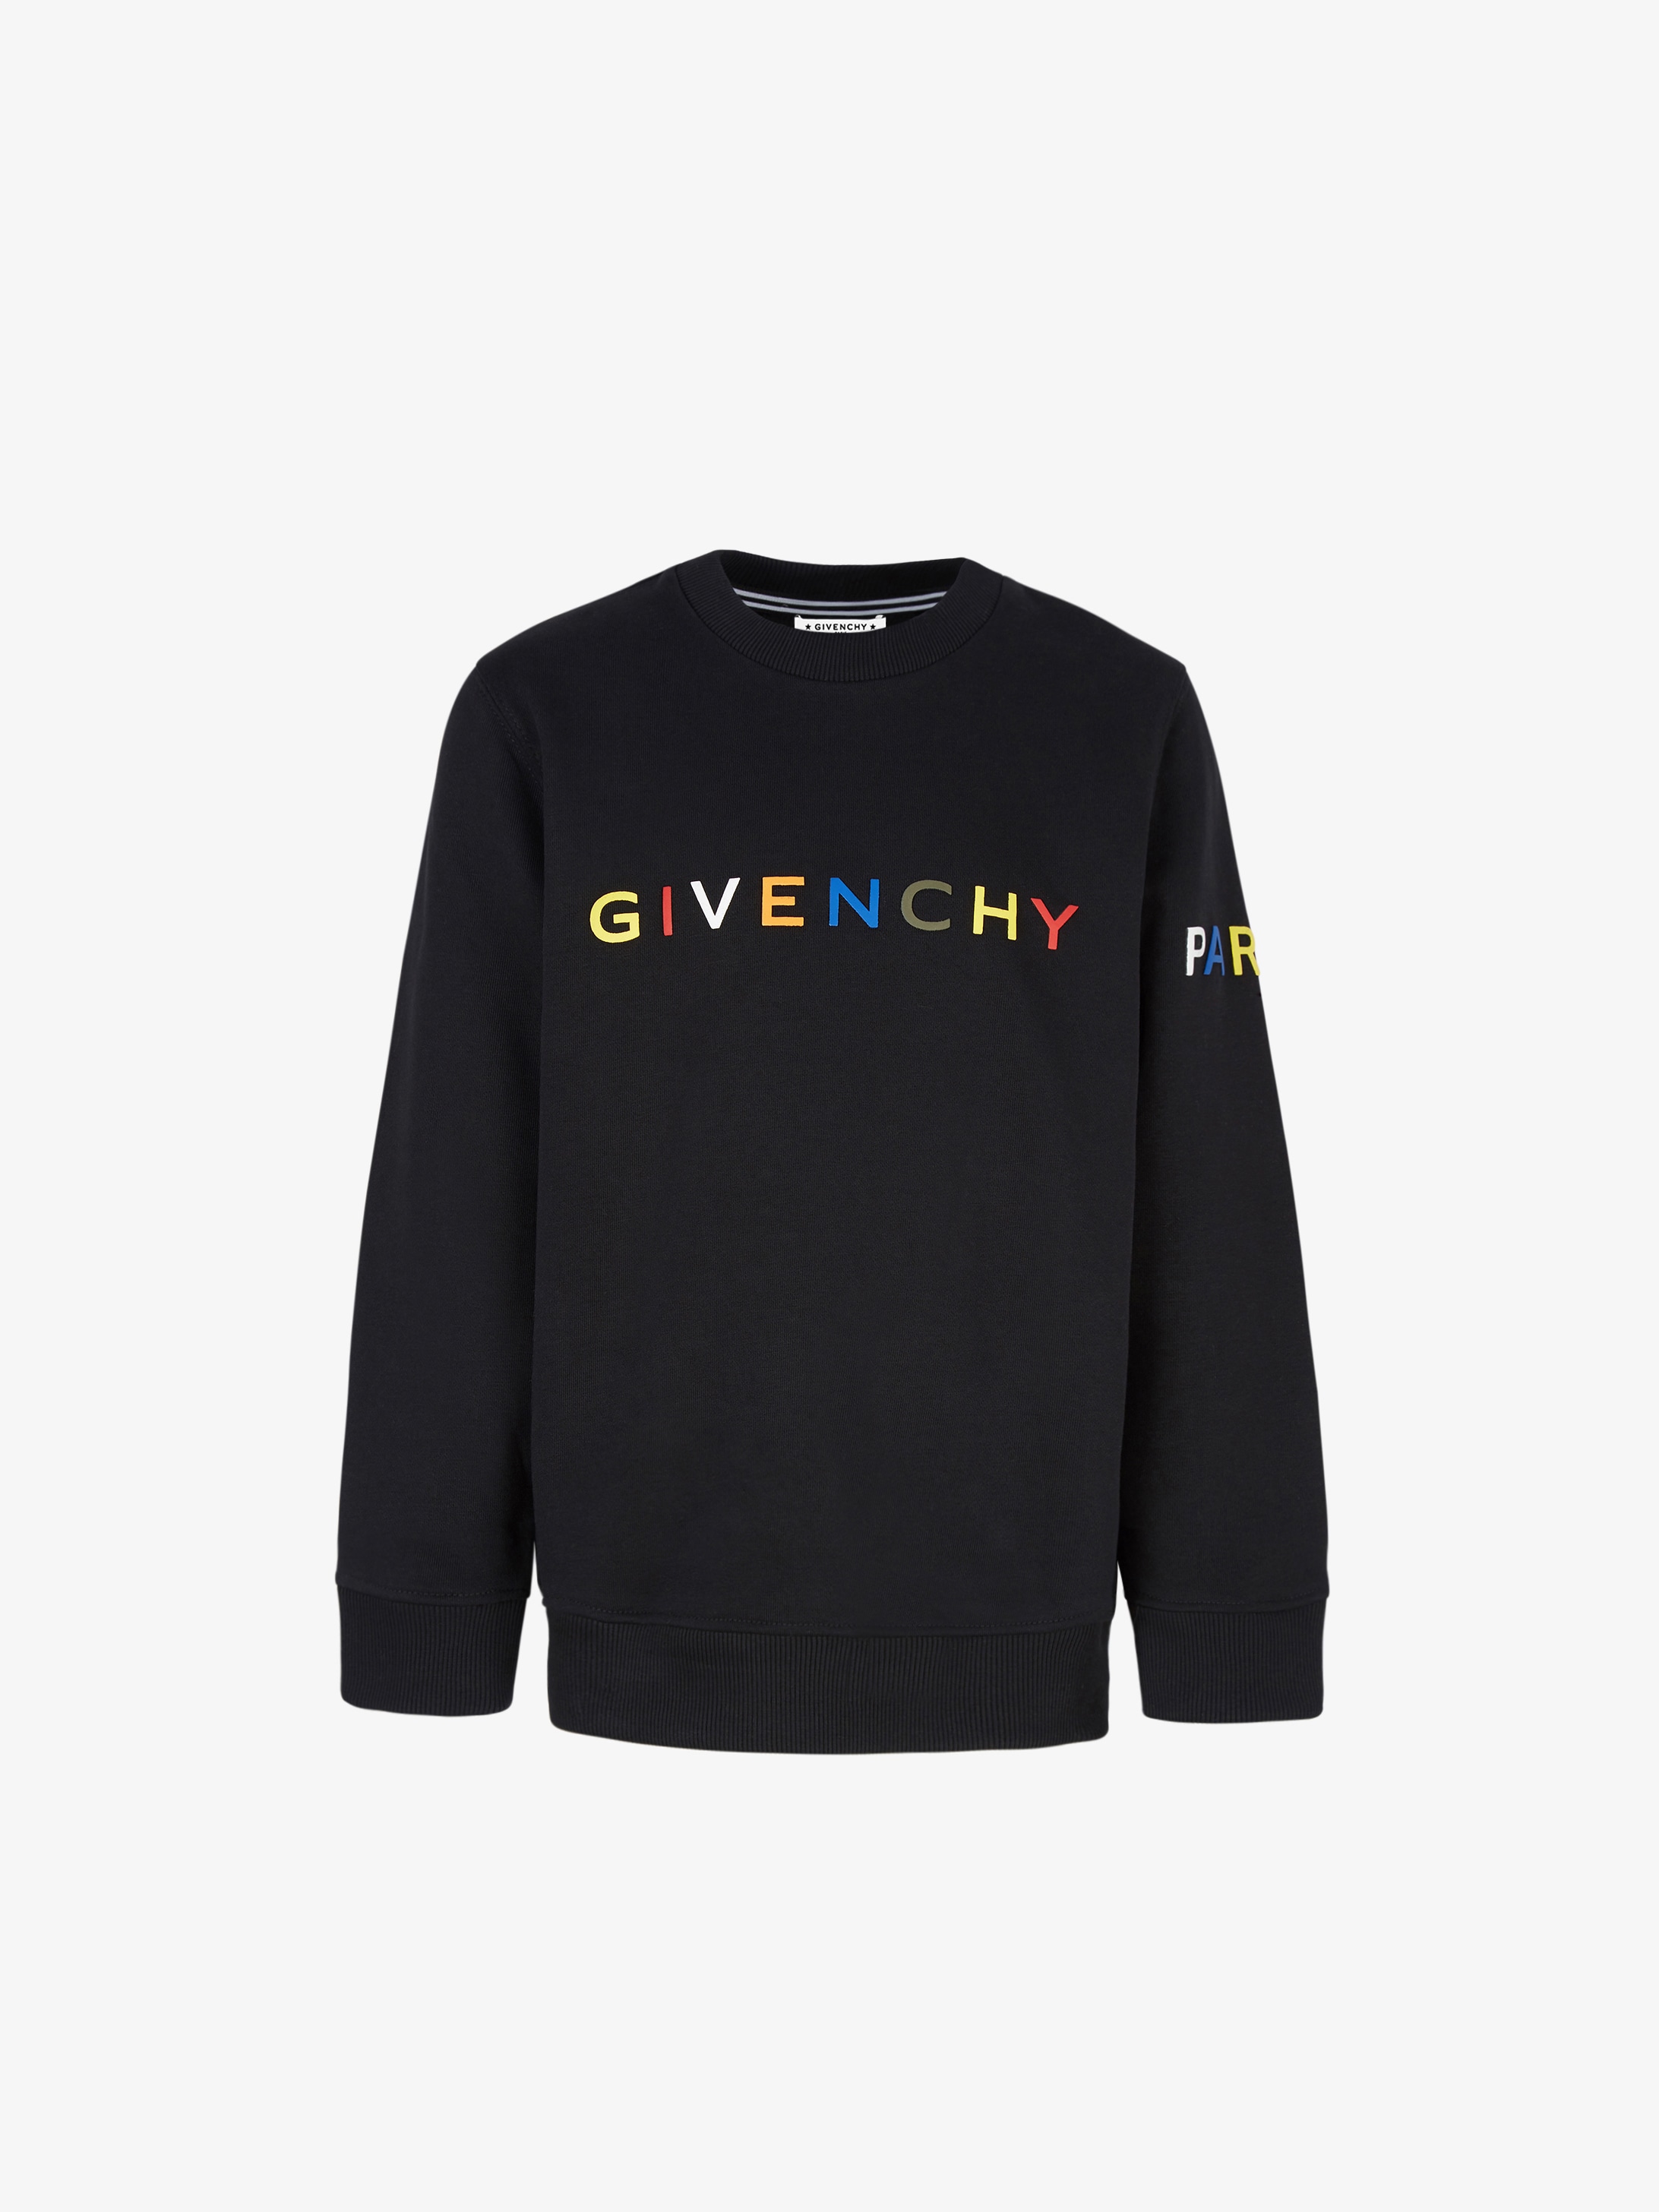 GIVENCHY PARIS sweatshirt | GIVENCHY Paris